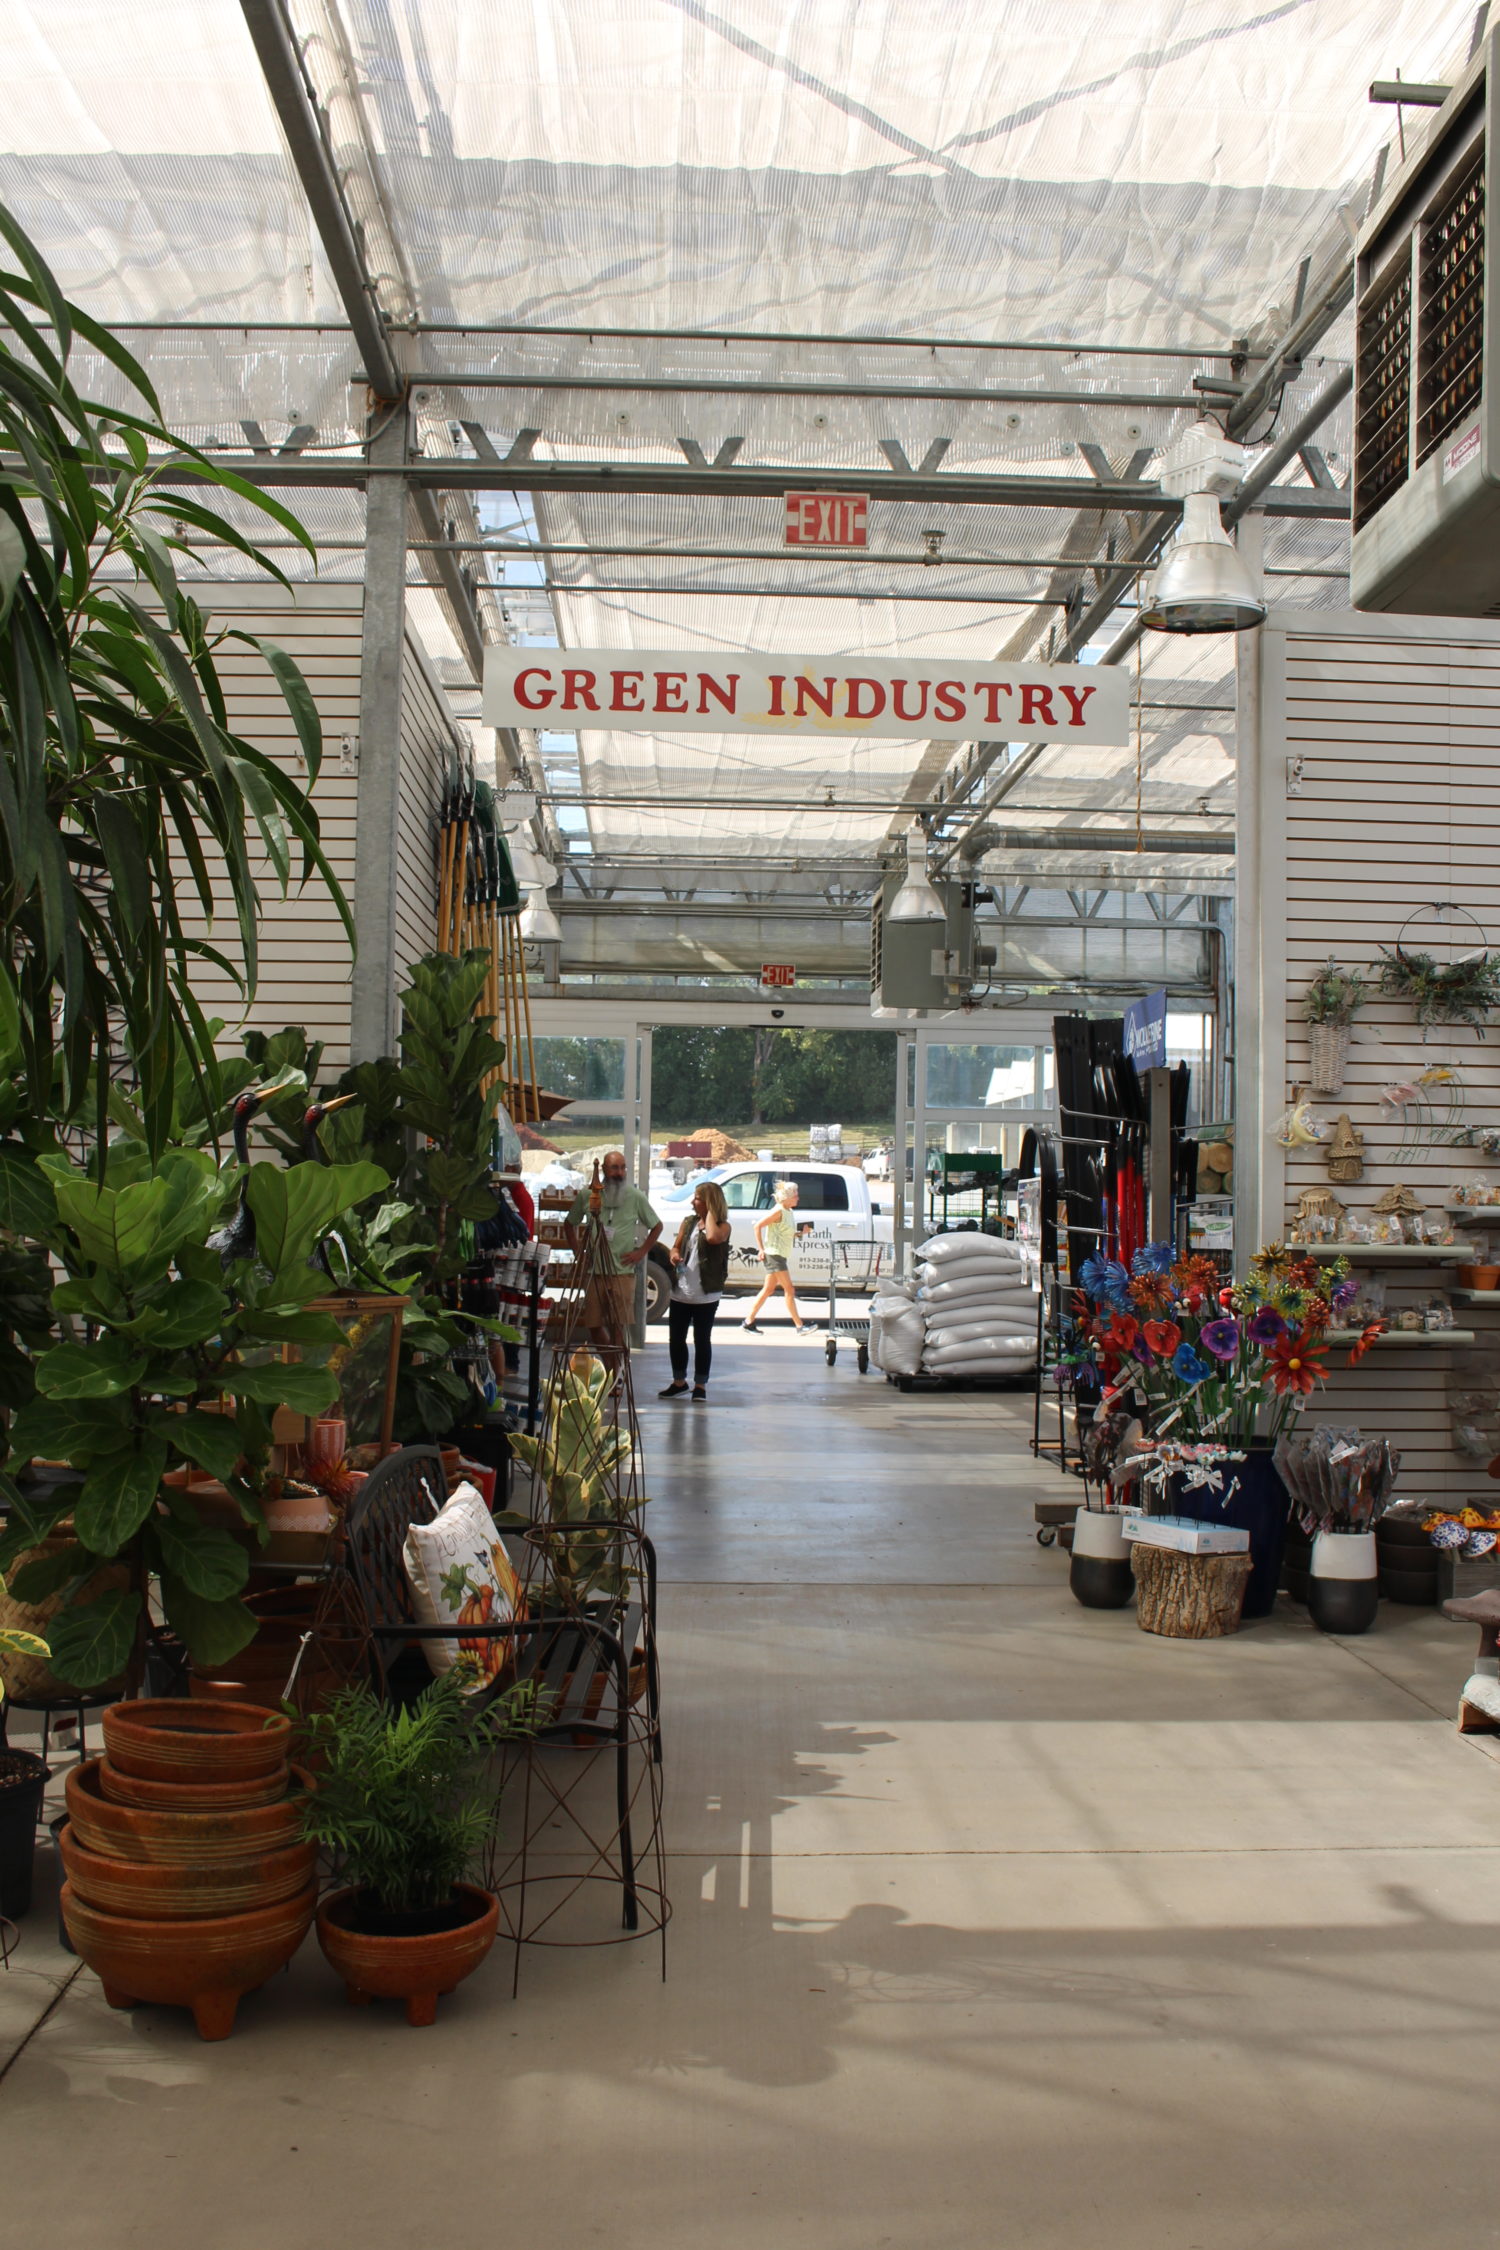 “Green Industry” sign at Suburban Lawn & Garden